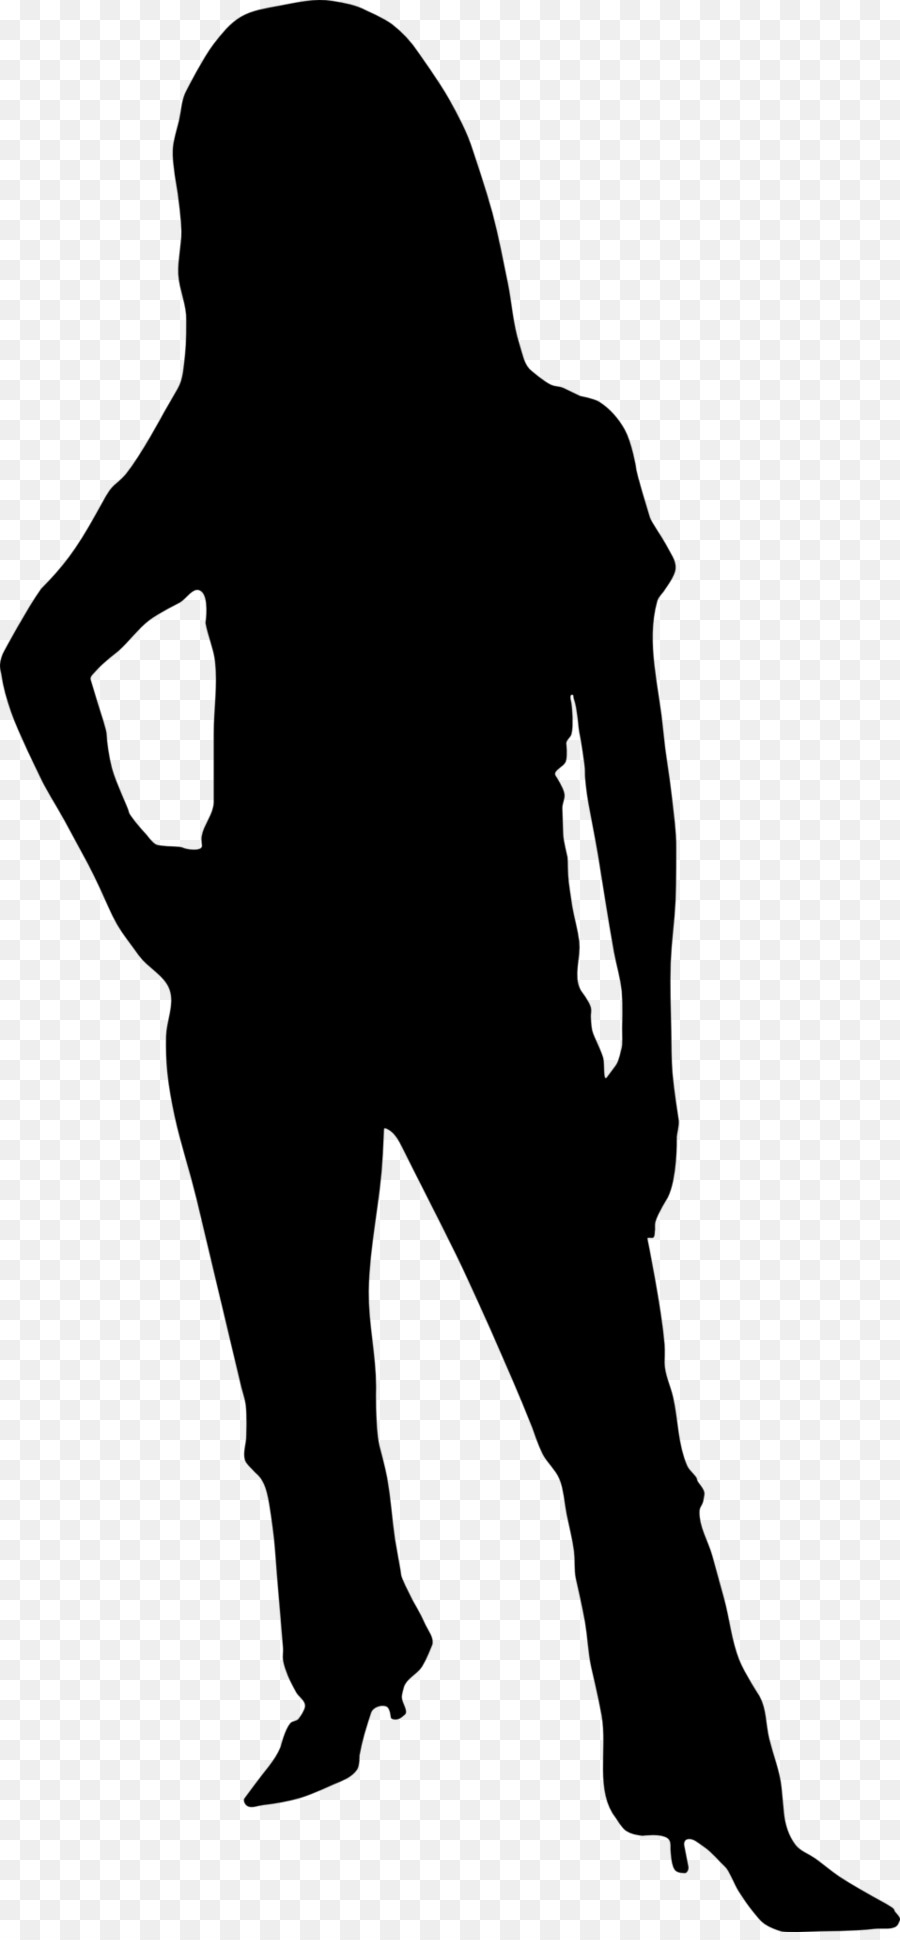 Silhouette Woman Clip art - male nurse png download - 958*2057 - Free Transparent Silhouette png Download.